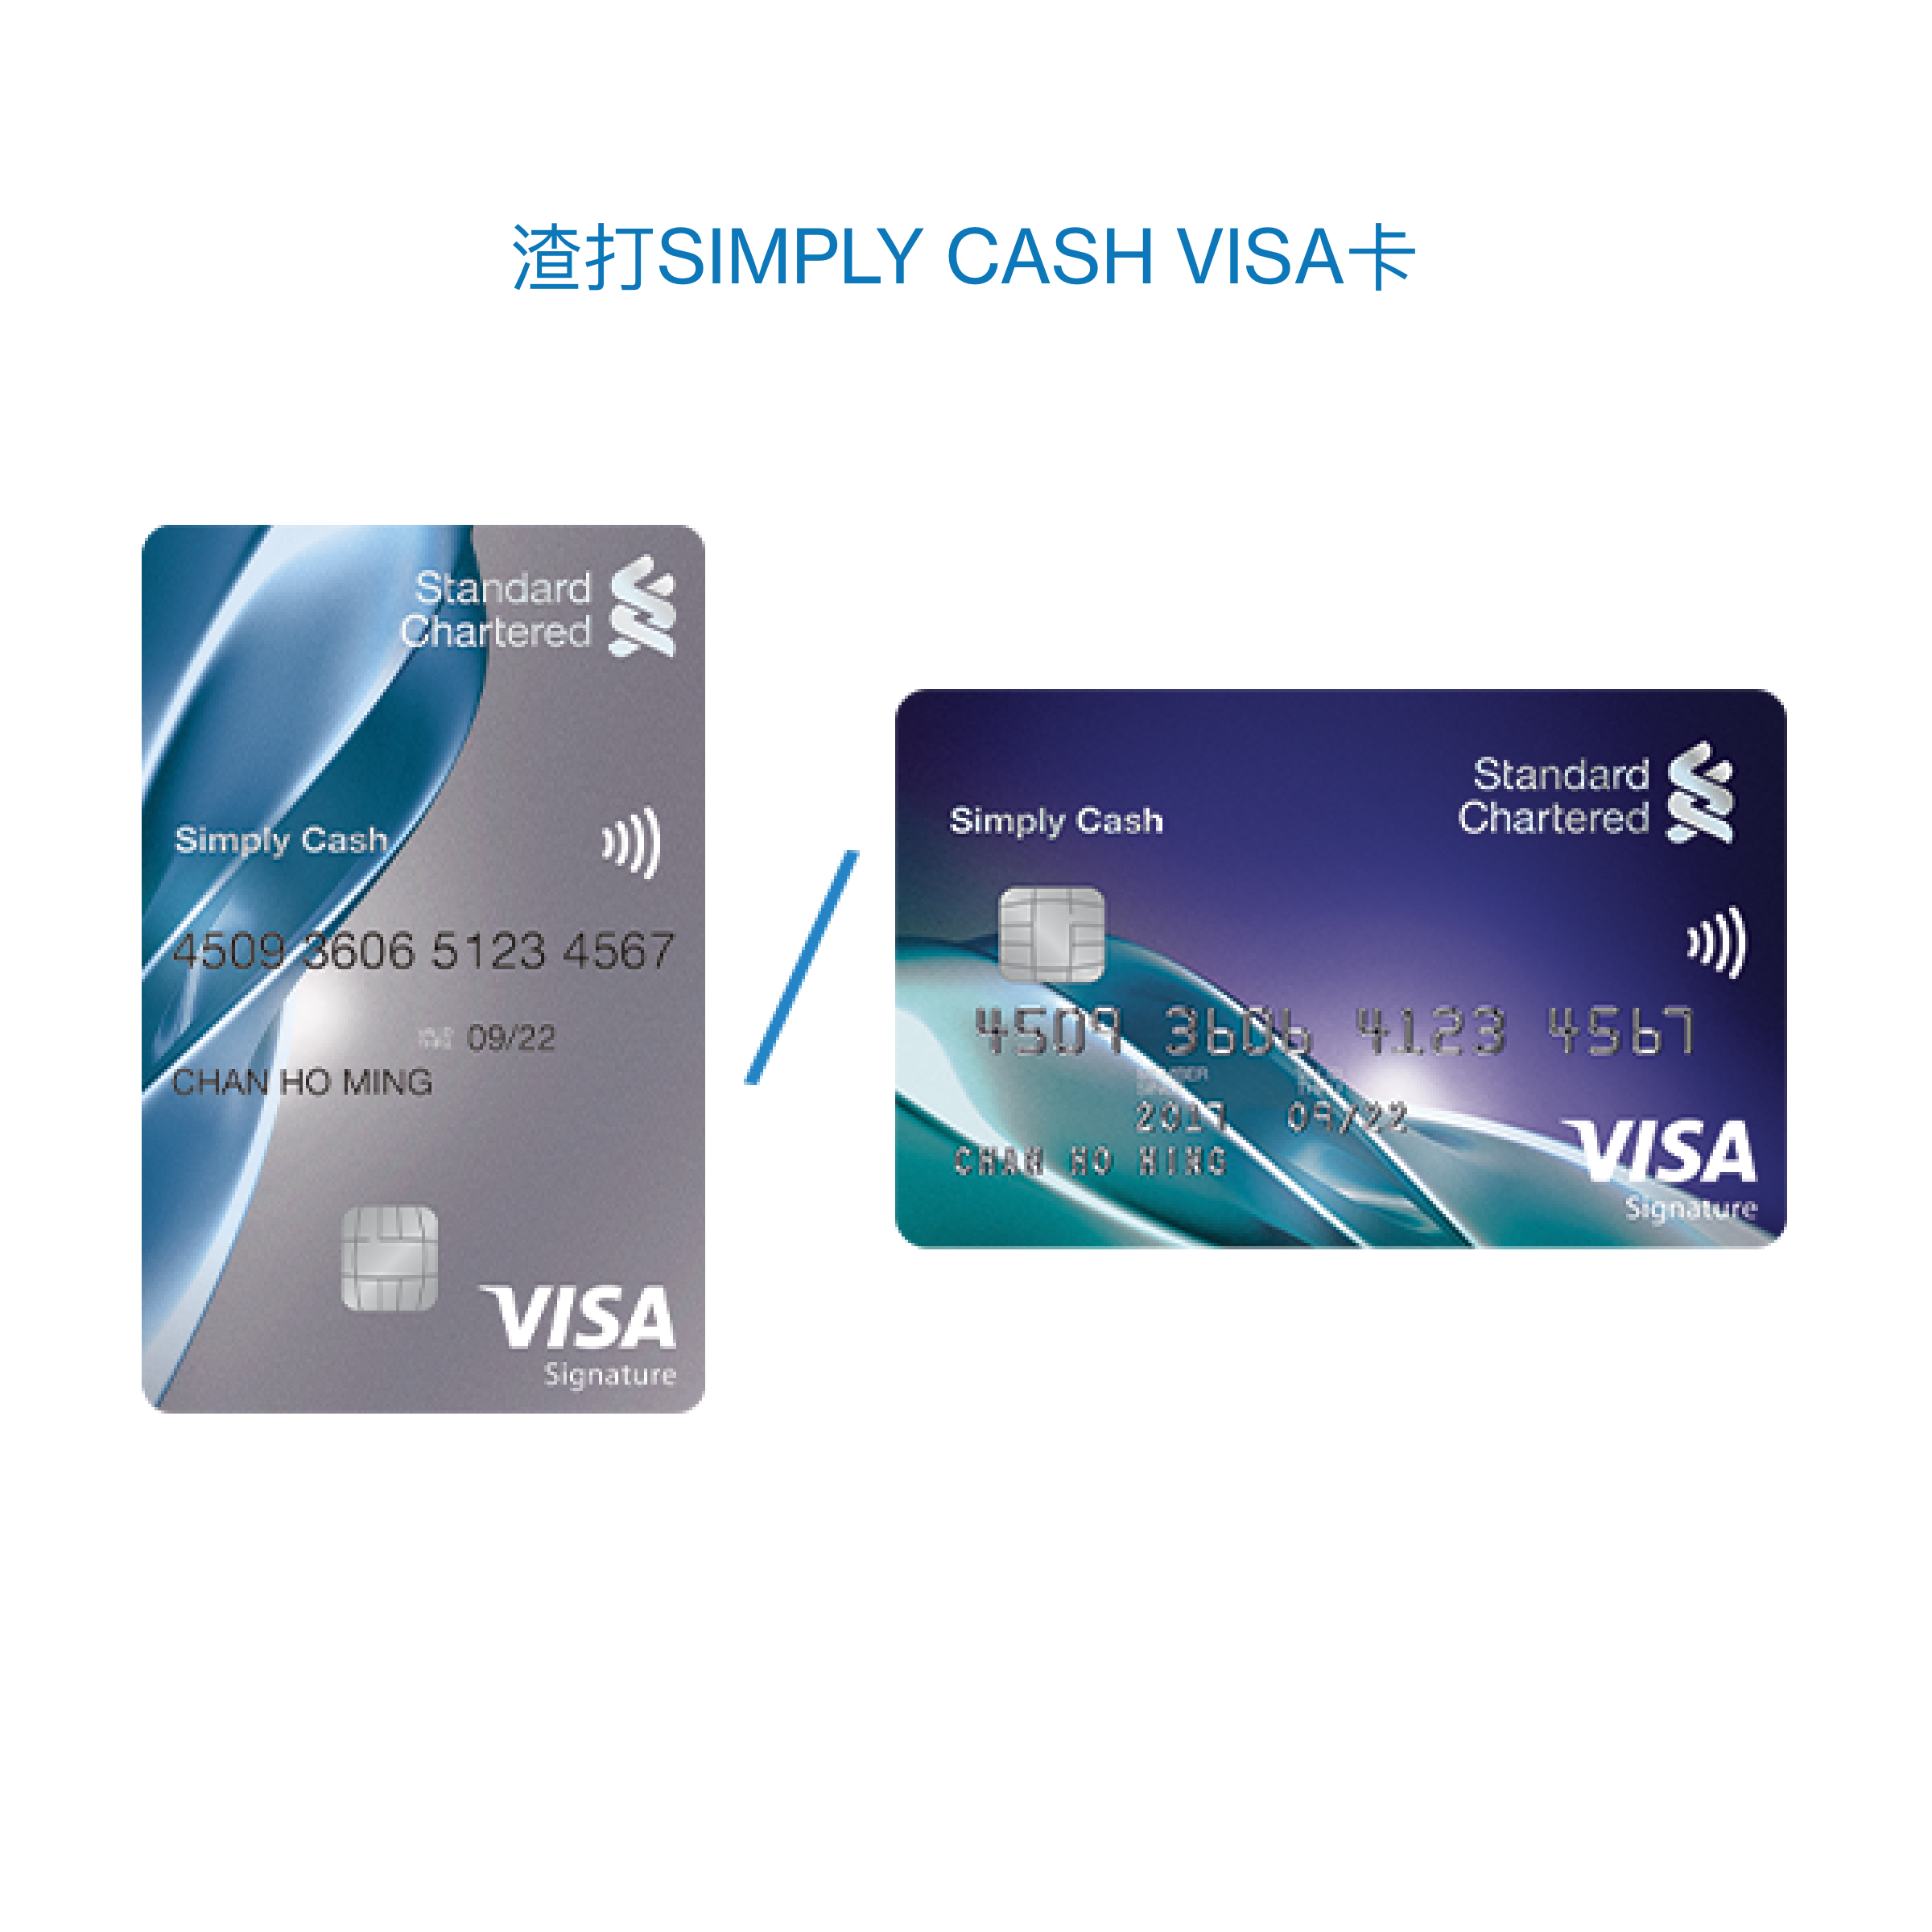 Credit card – apply credit card online – simply cash visa card – 01 nov